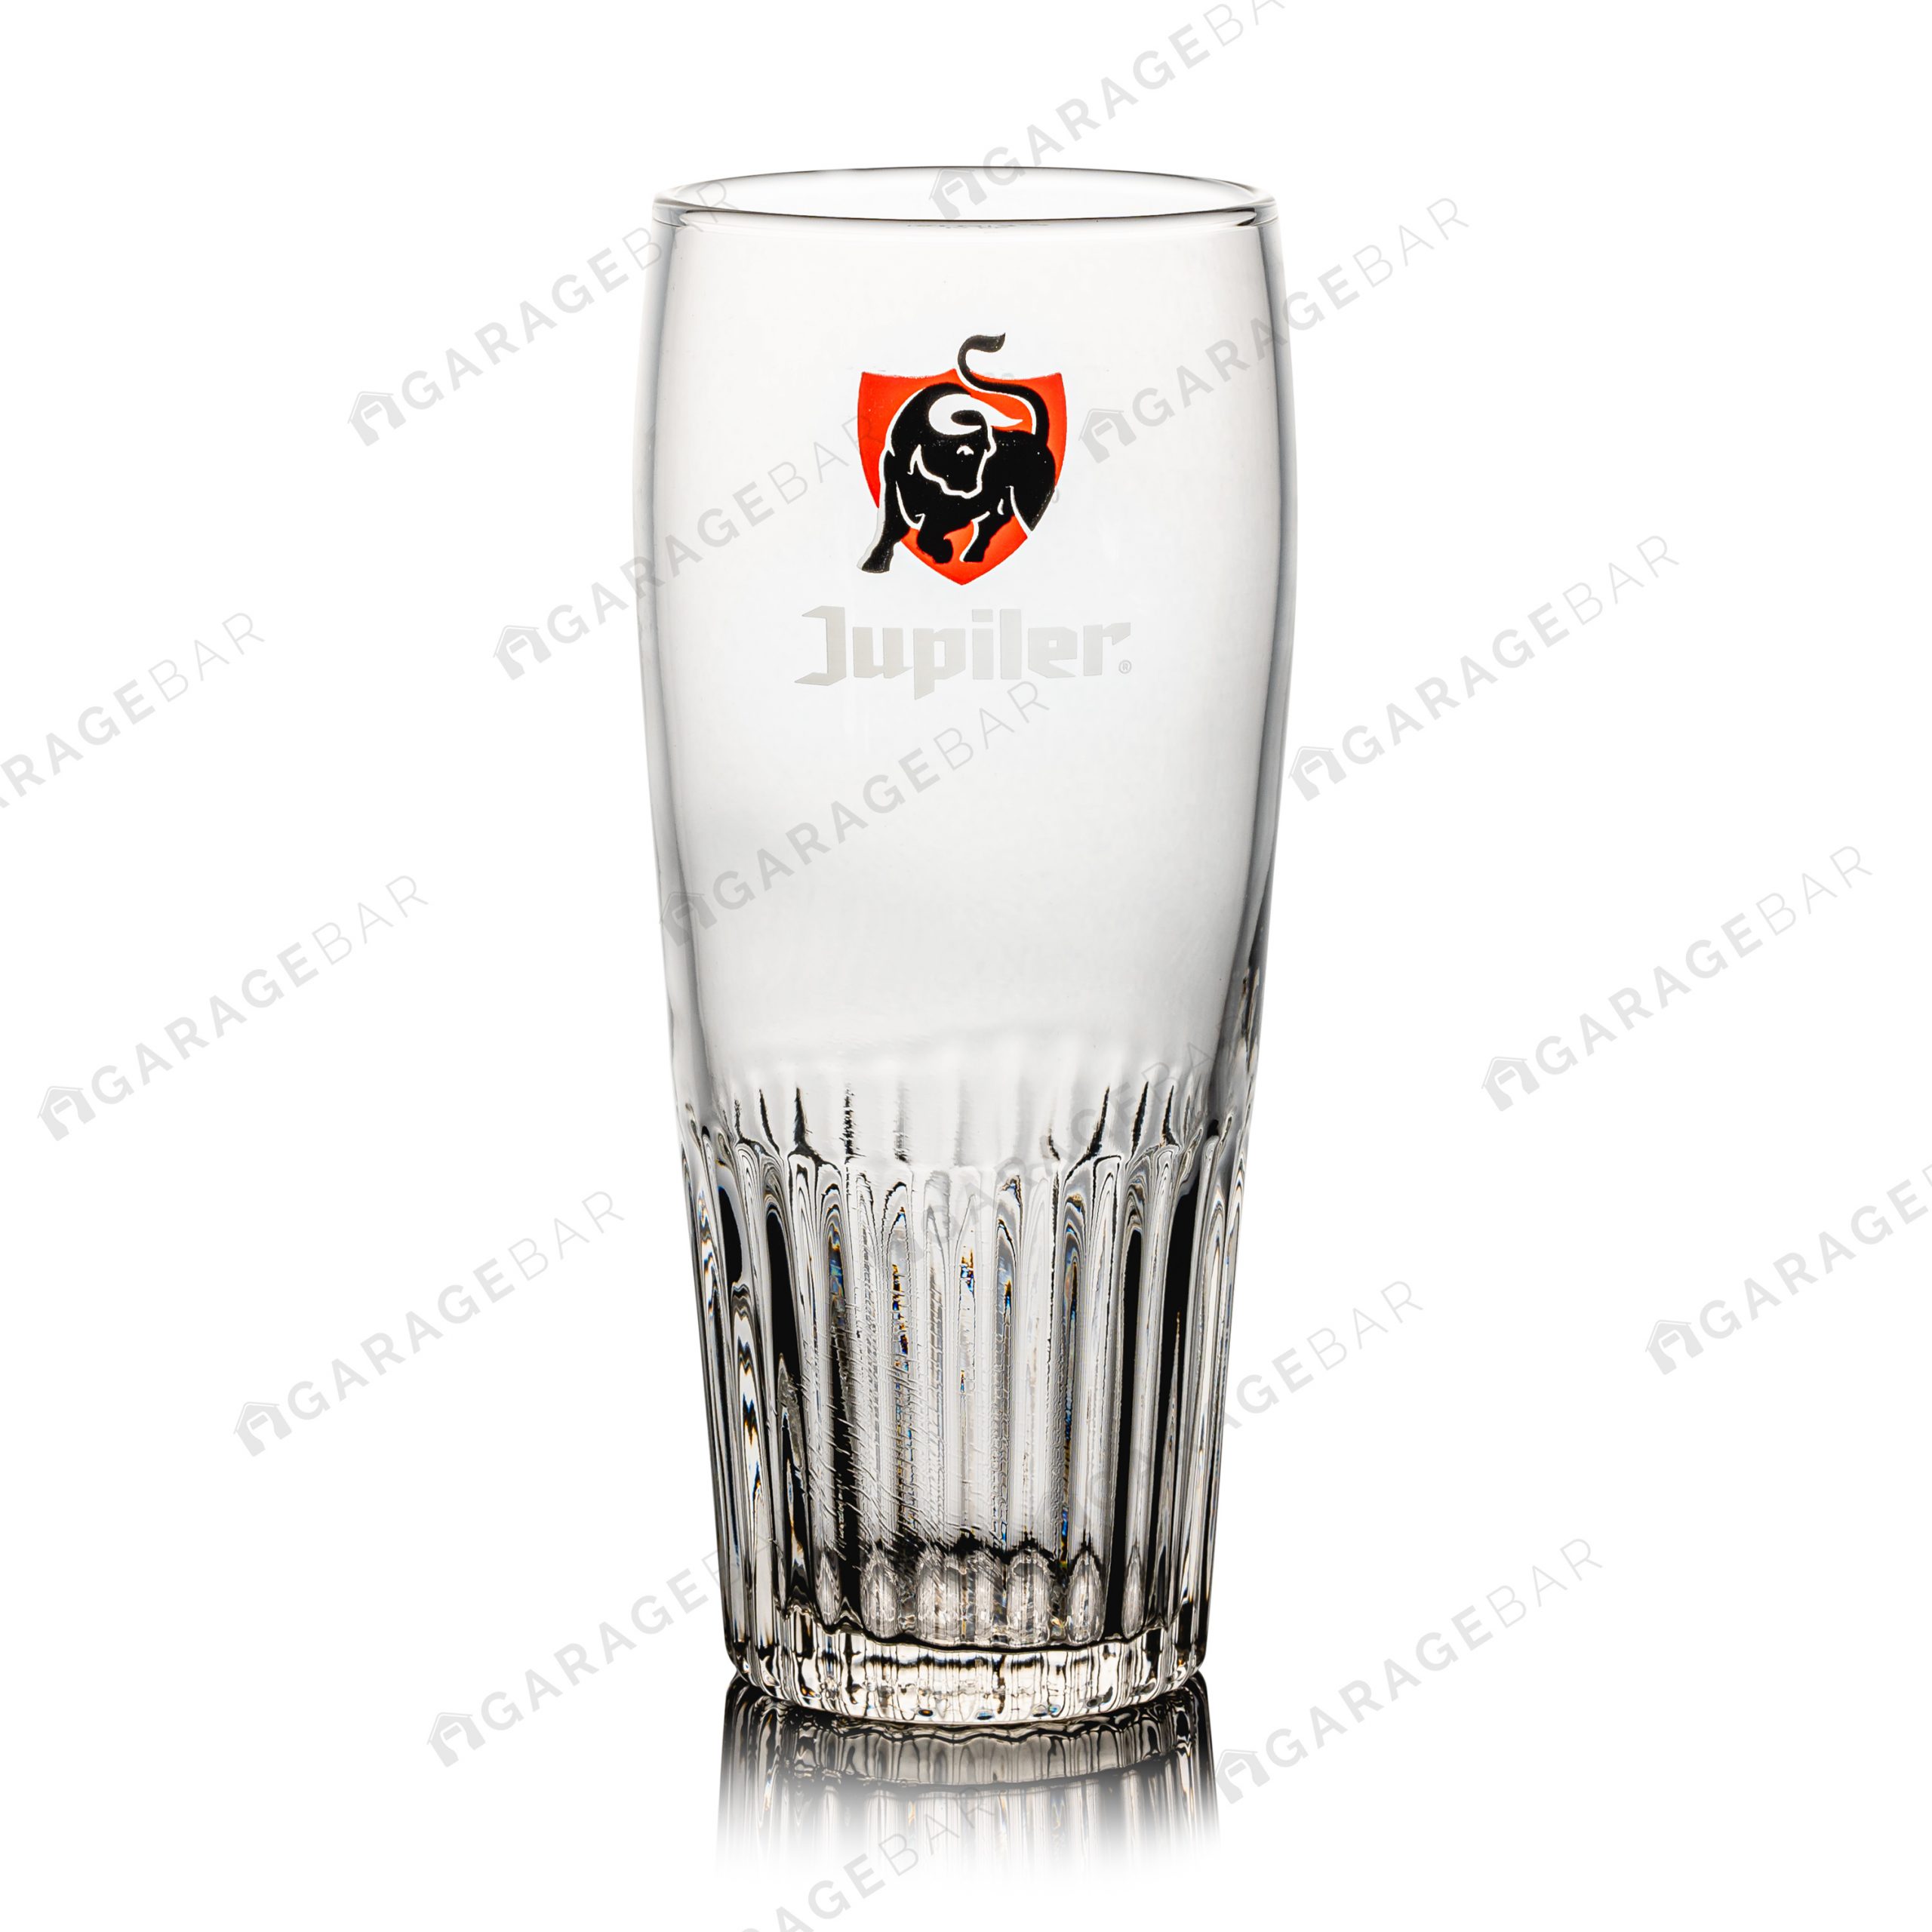 Jupiler Beer Glass